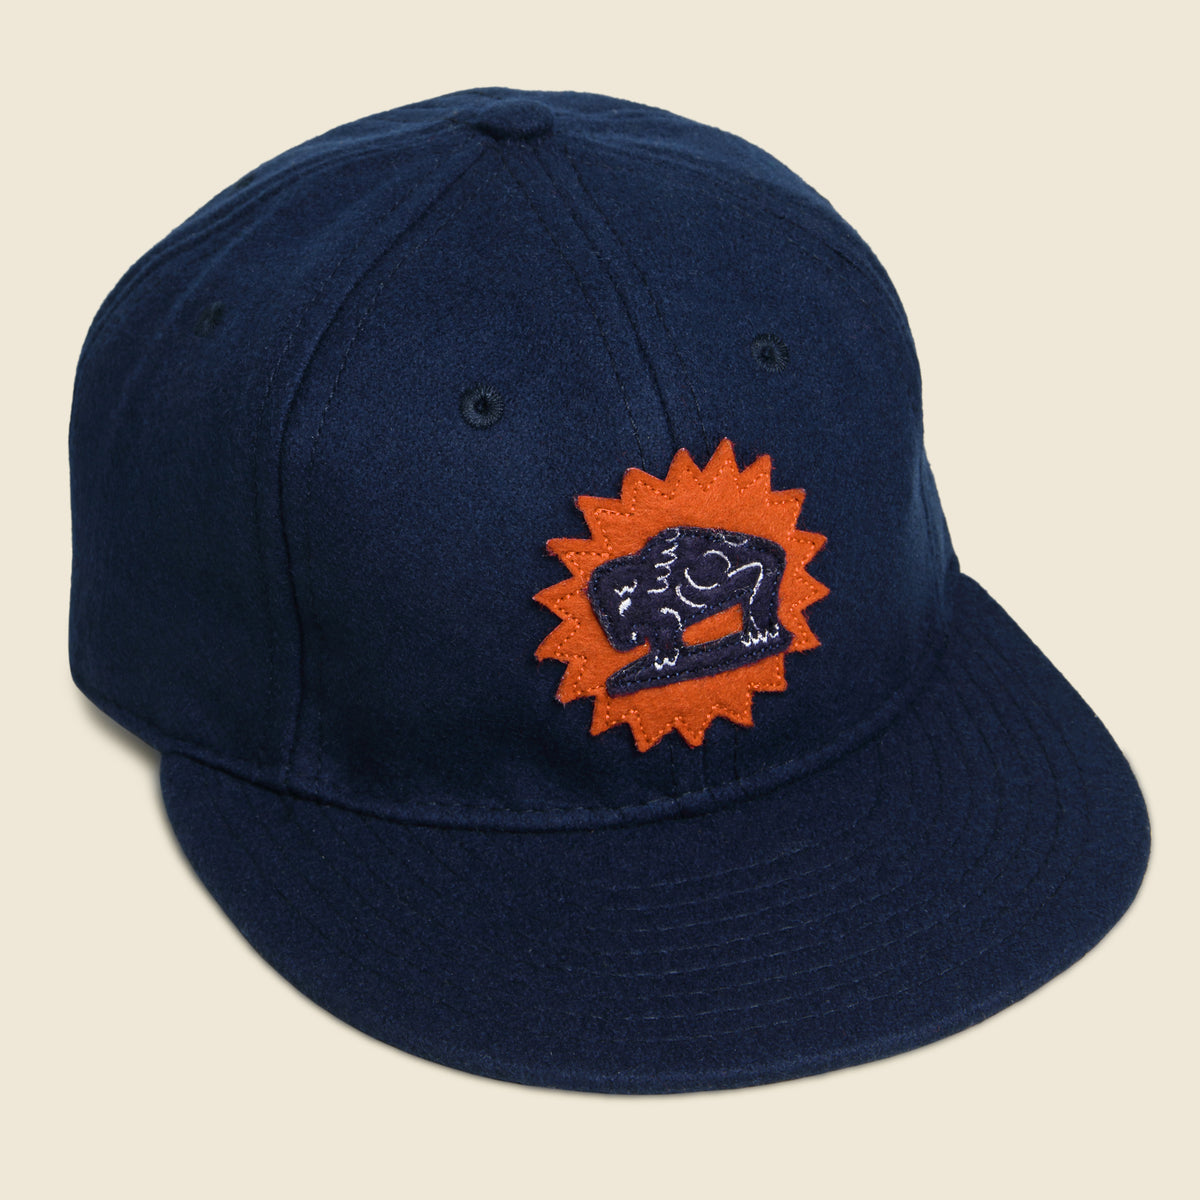 St. Louis Blues Cord Baseball Hat